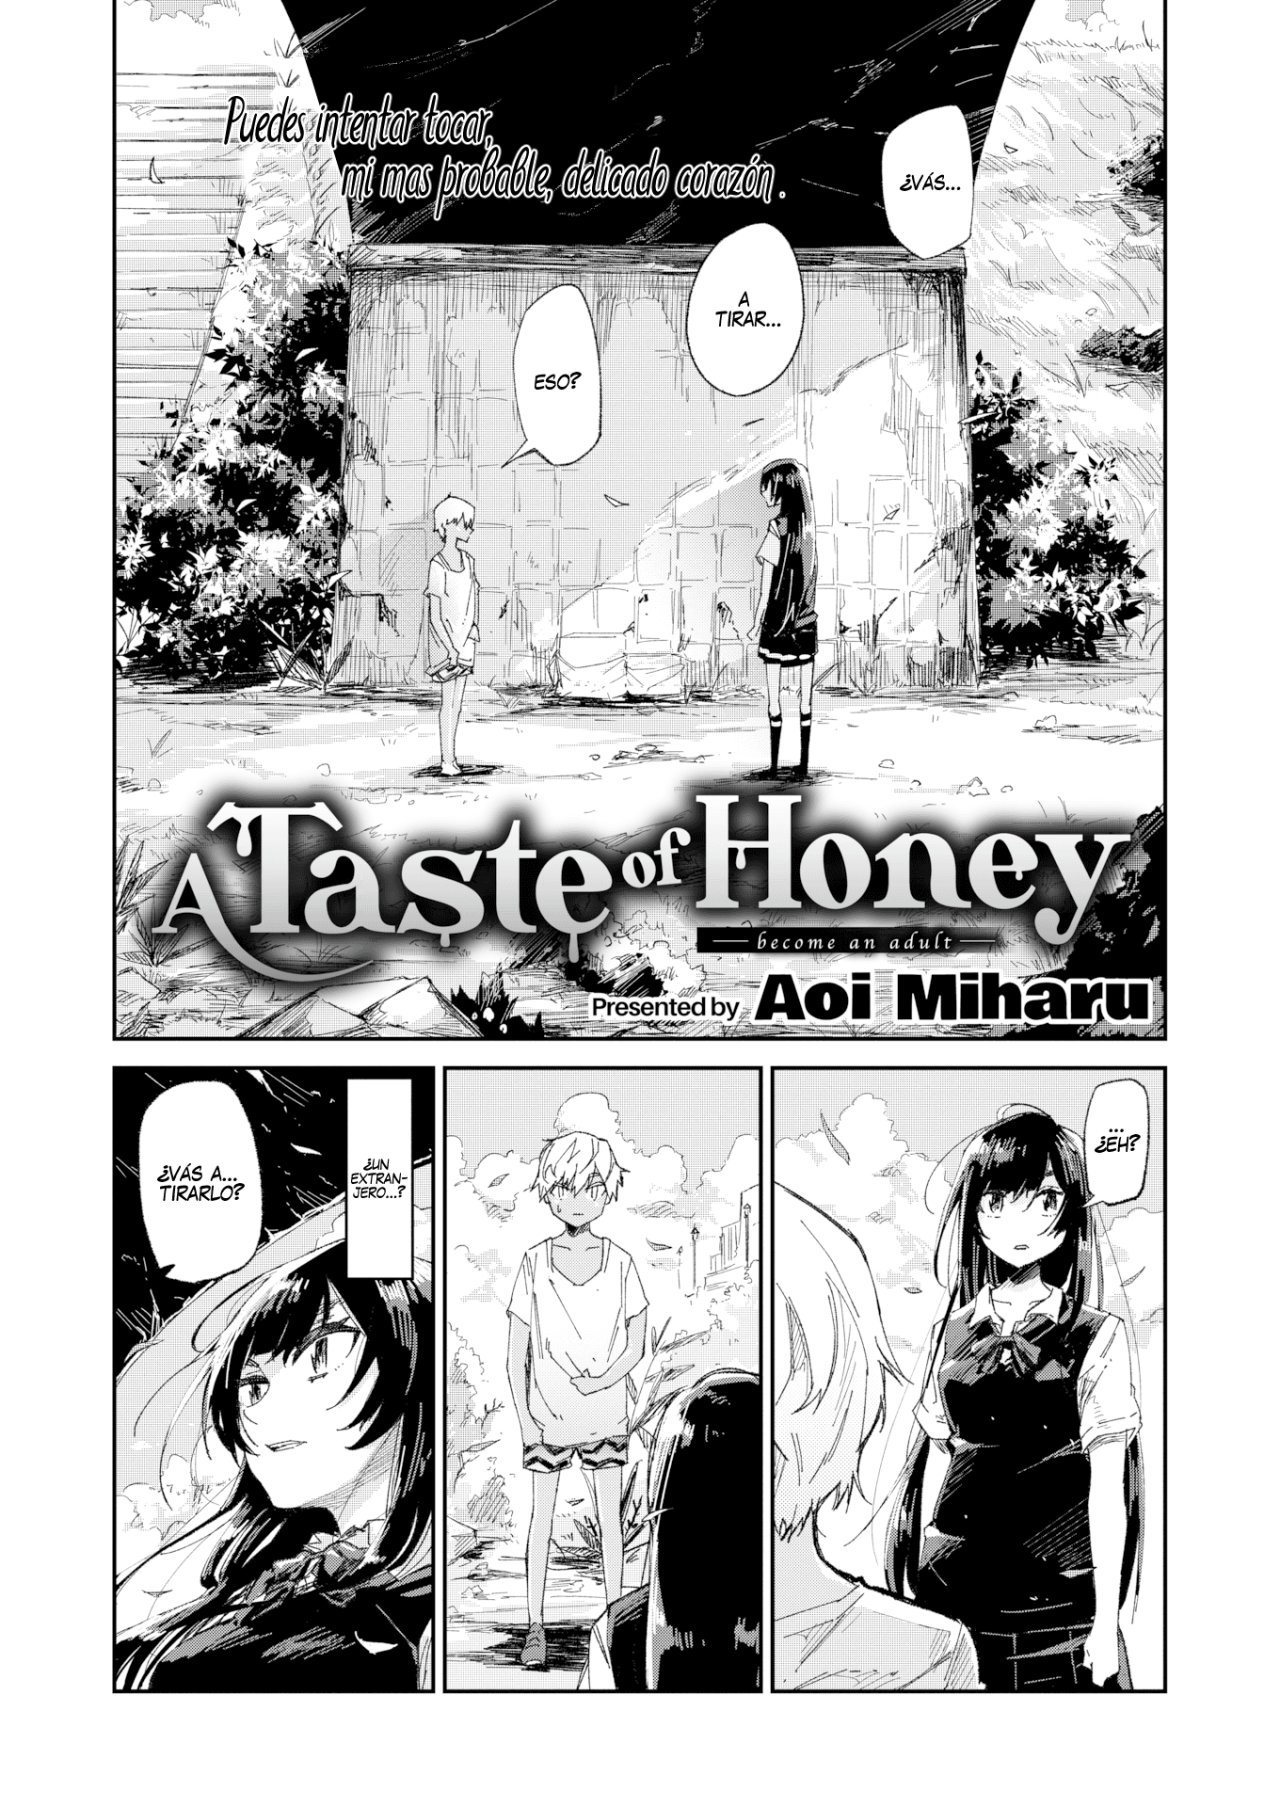 A Taste of Honey Part 1 - 1